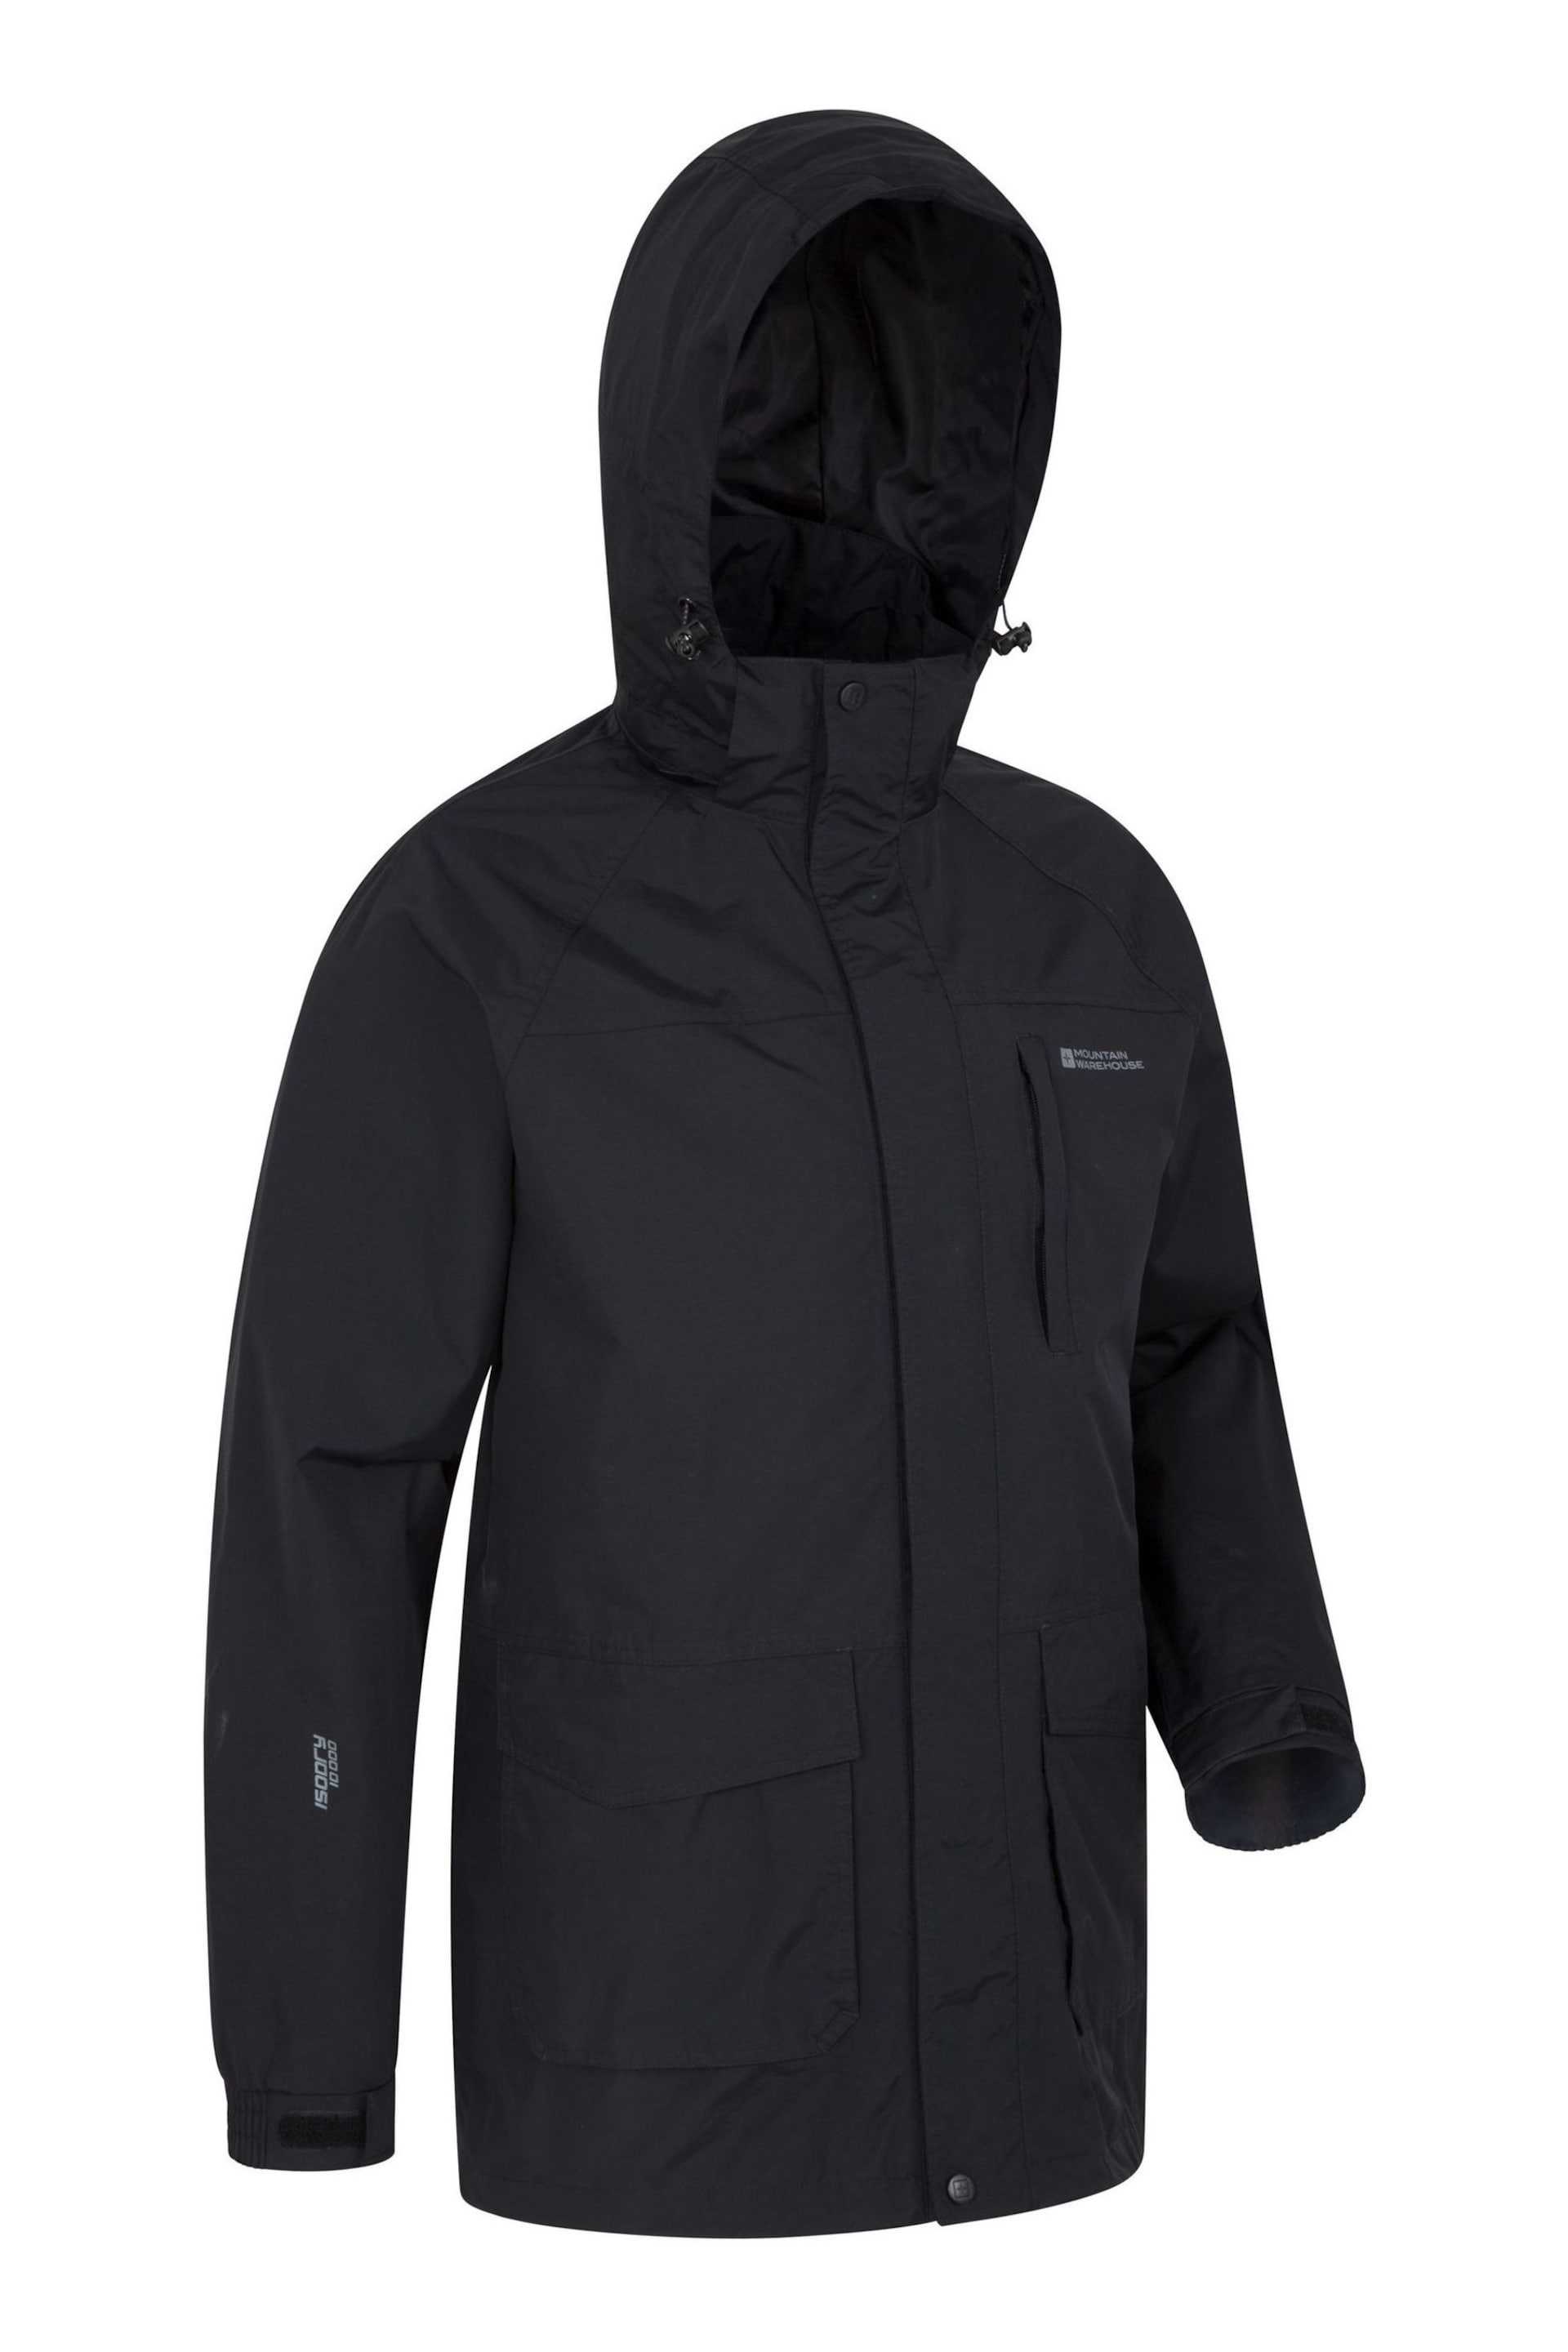 Mountain Warehouse Black Glacier Ii Extreme Mens Waterproof Long Jacket - Image 2 of 5